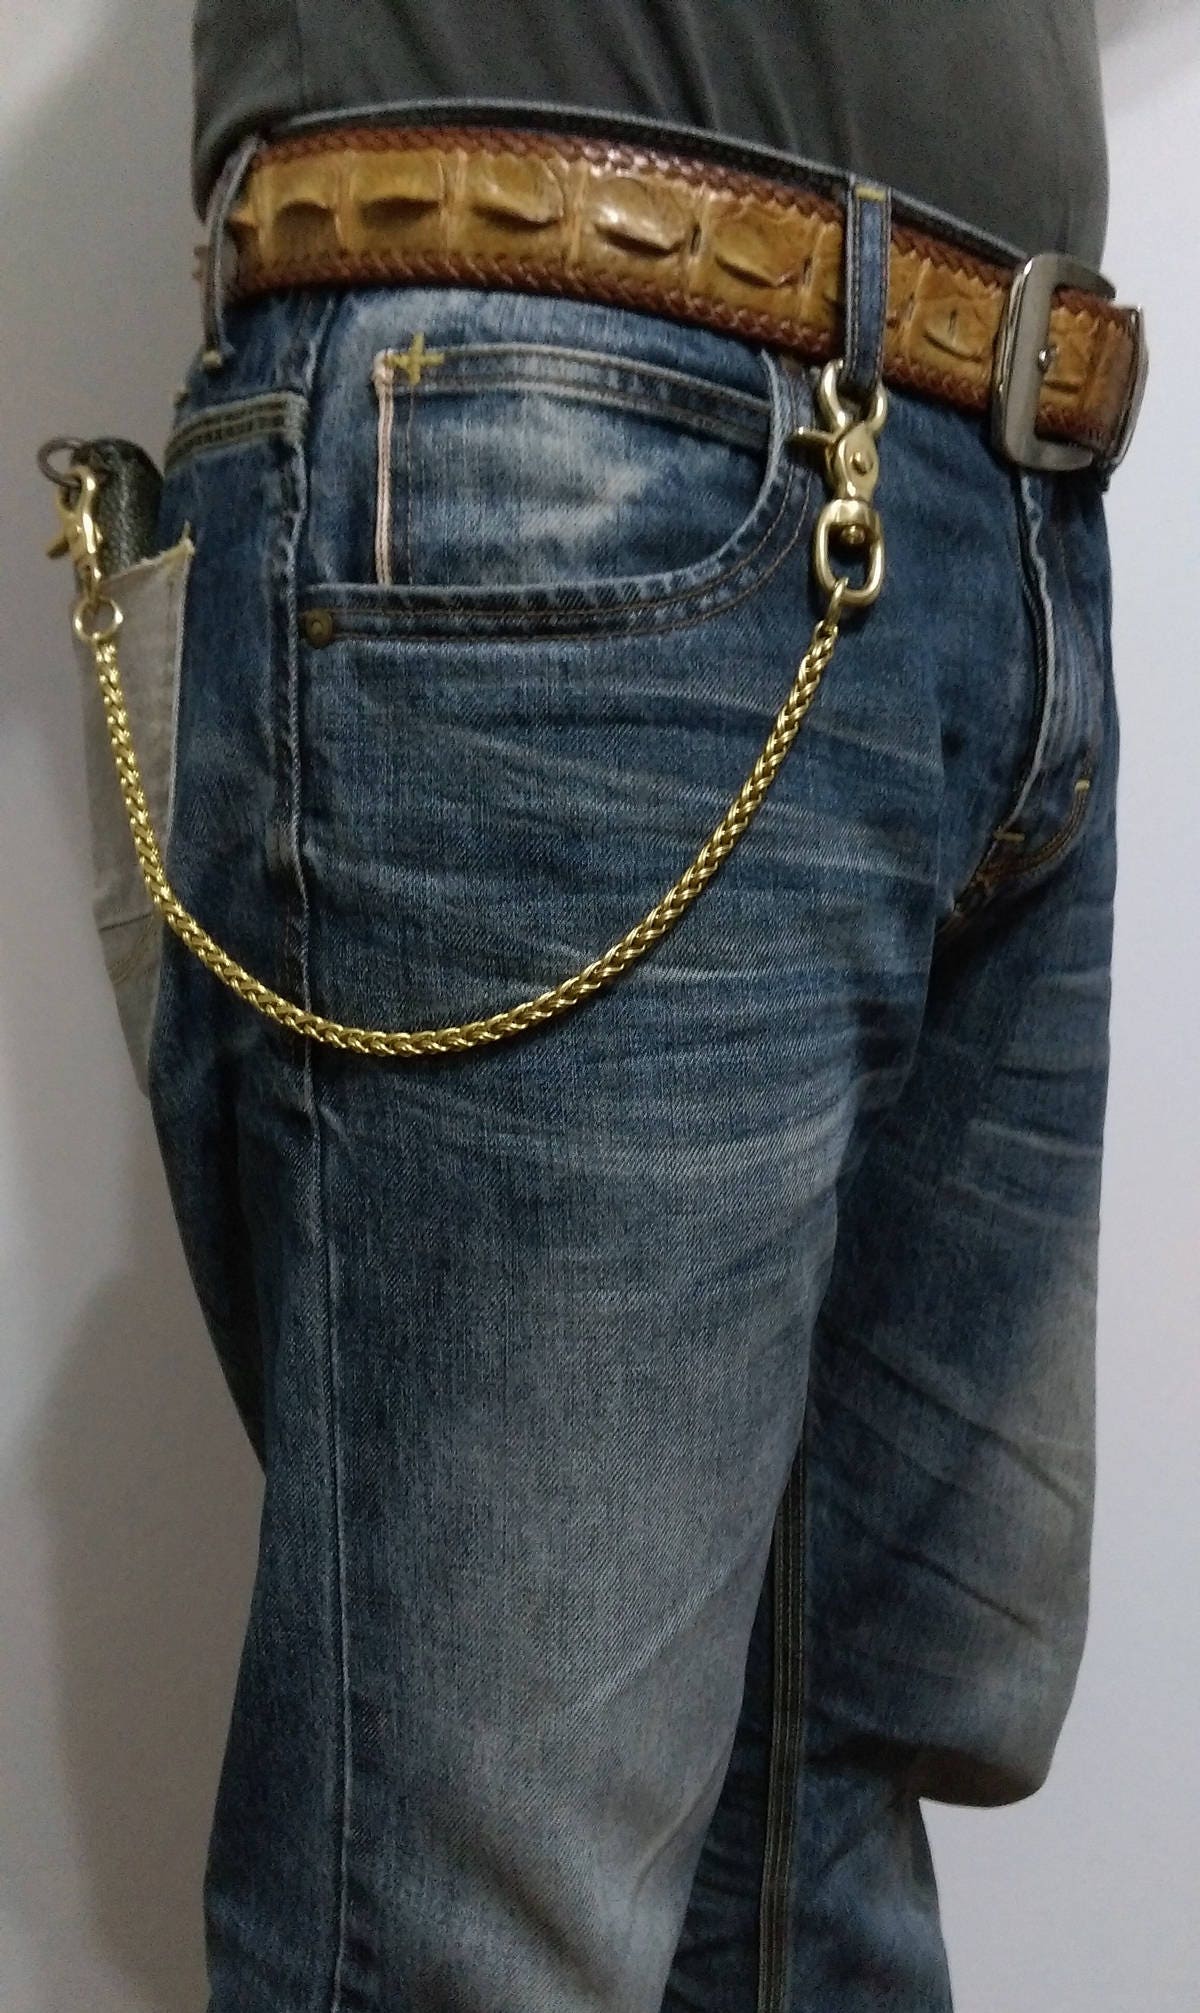 Walbest Cool Men Women Pants Multi-layer Chain Hip Hop Anti-Lost Wallet  Chain Punk Rock Waist Chain Jeans Trousers Belts Keychain Motorcycle Gothic  